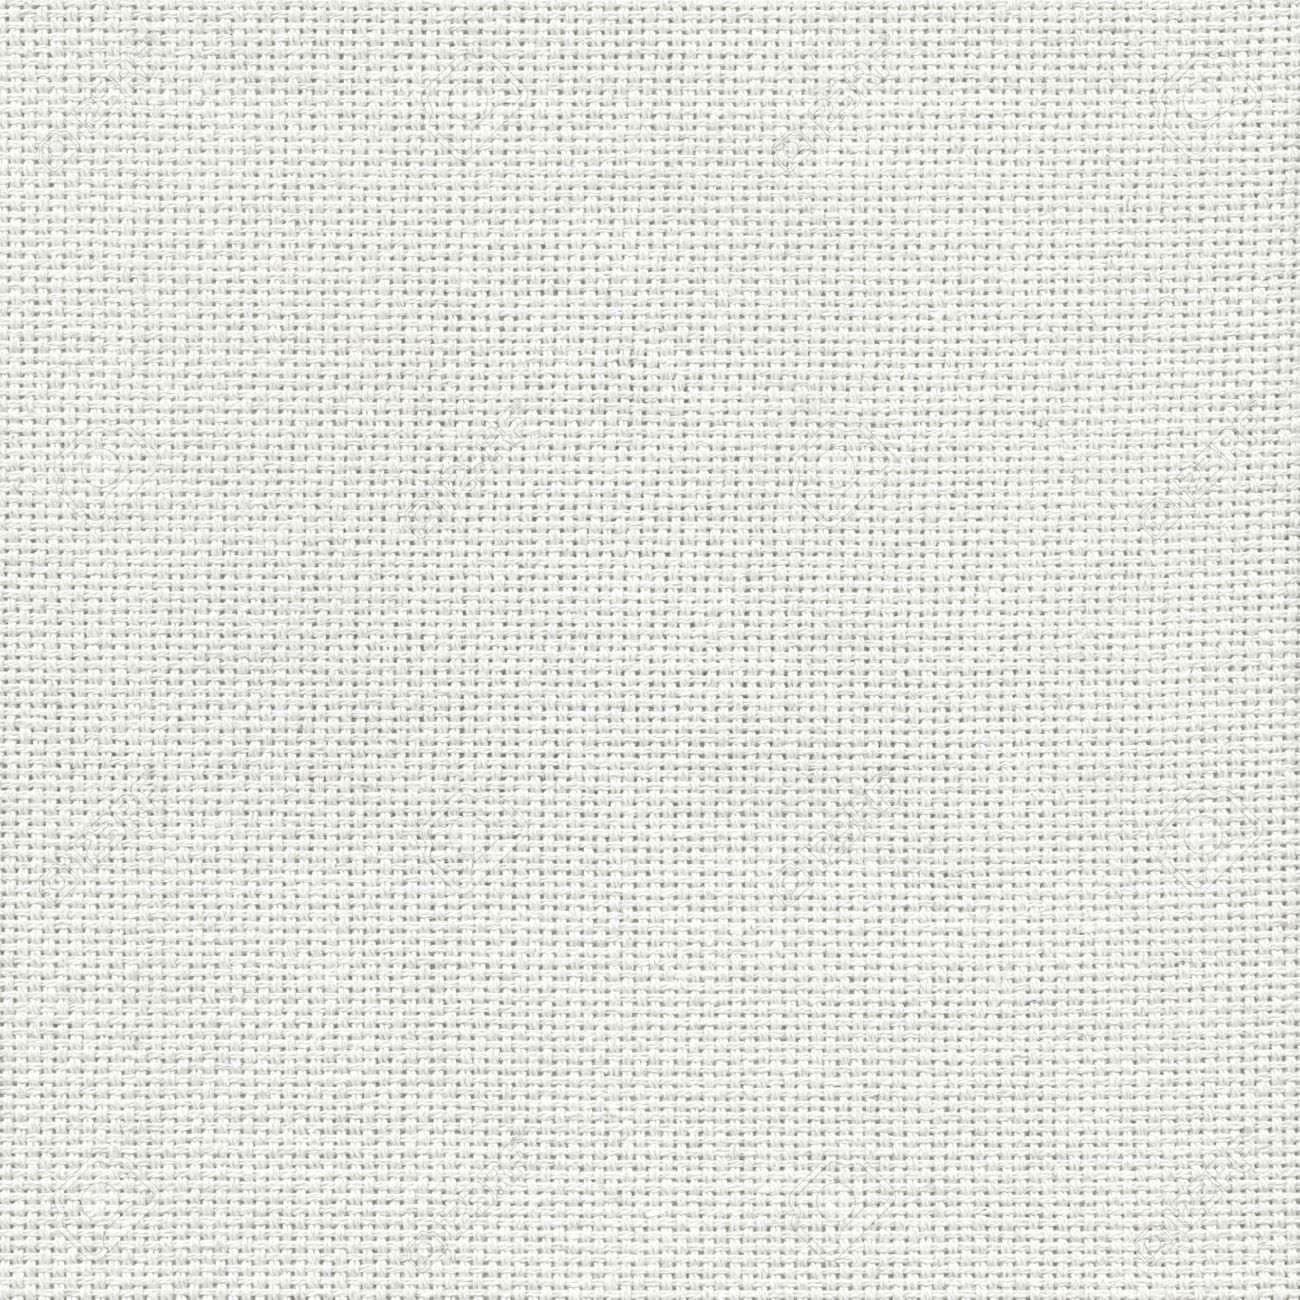 white empty canvas texture